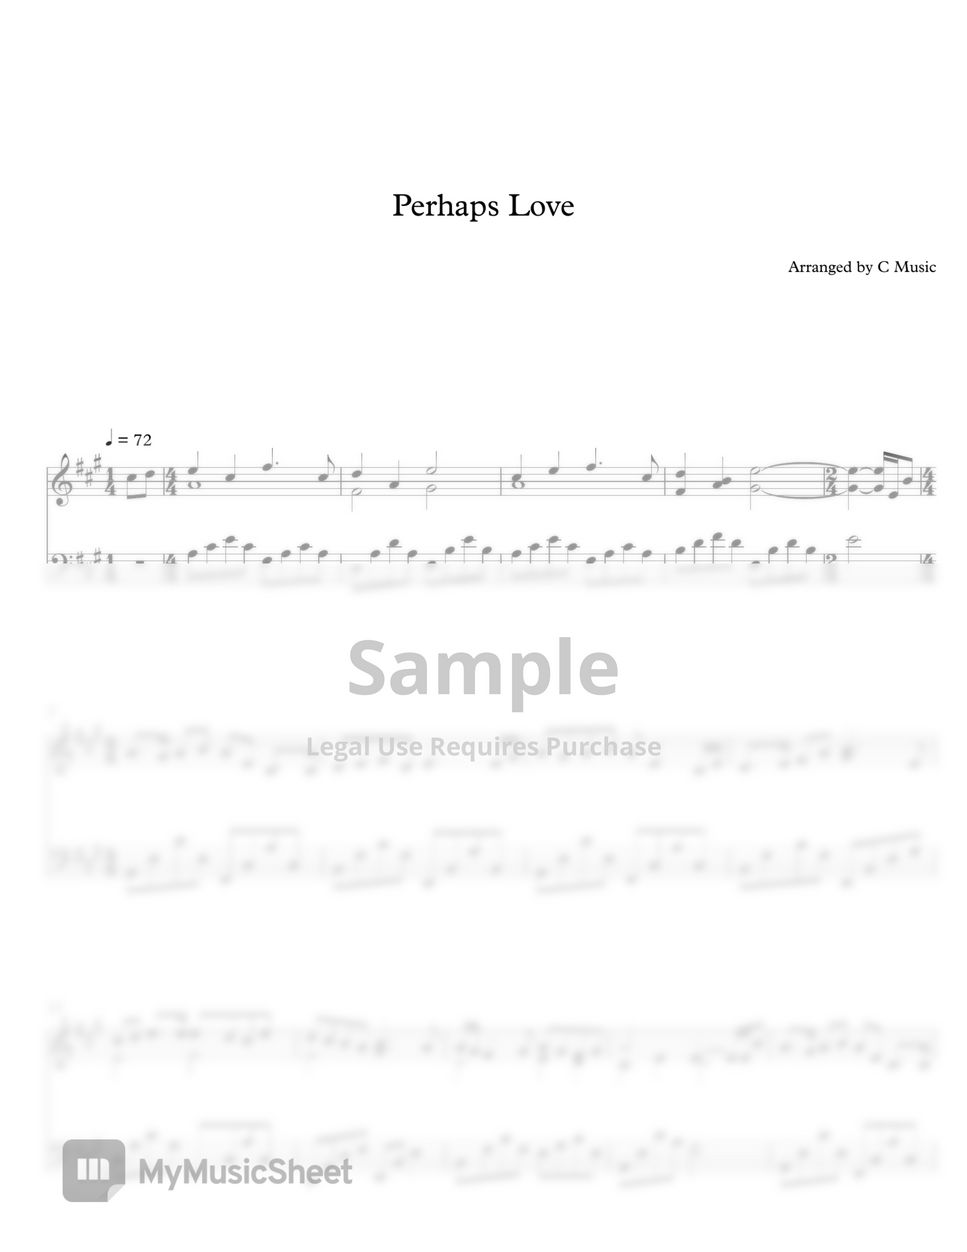 John Denver & Pacido Domingo - Perhaps Love by C Music